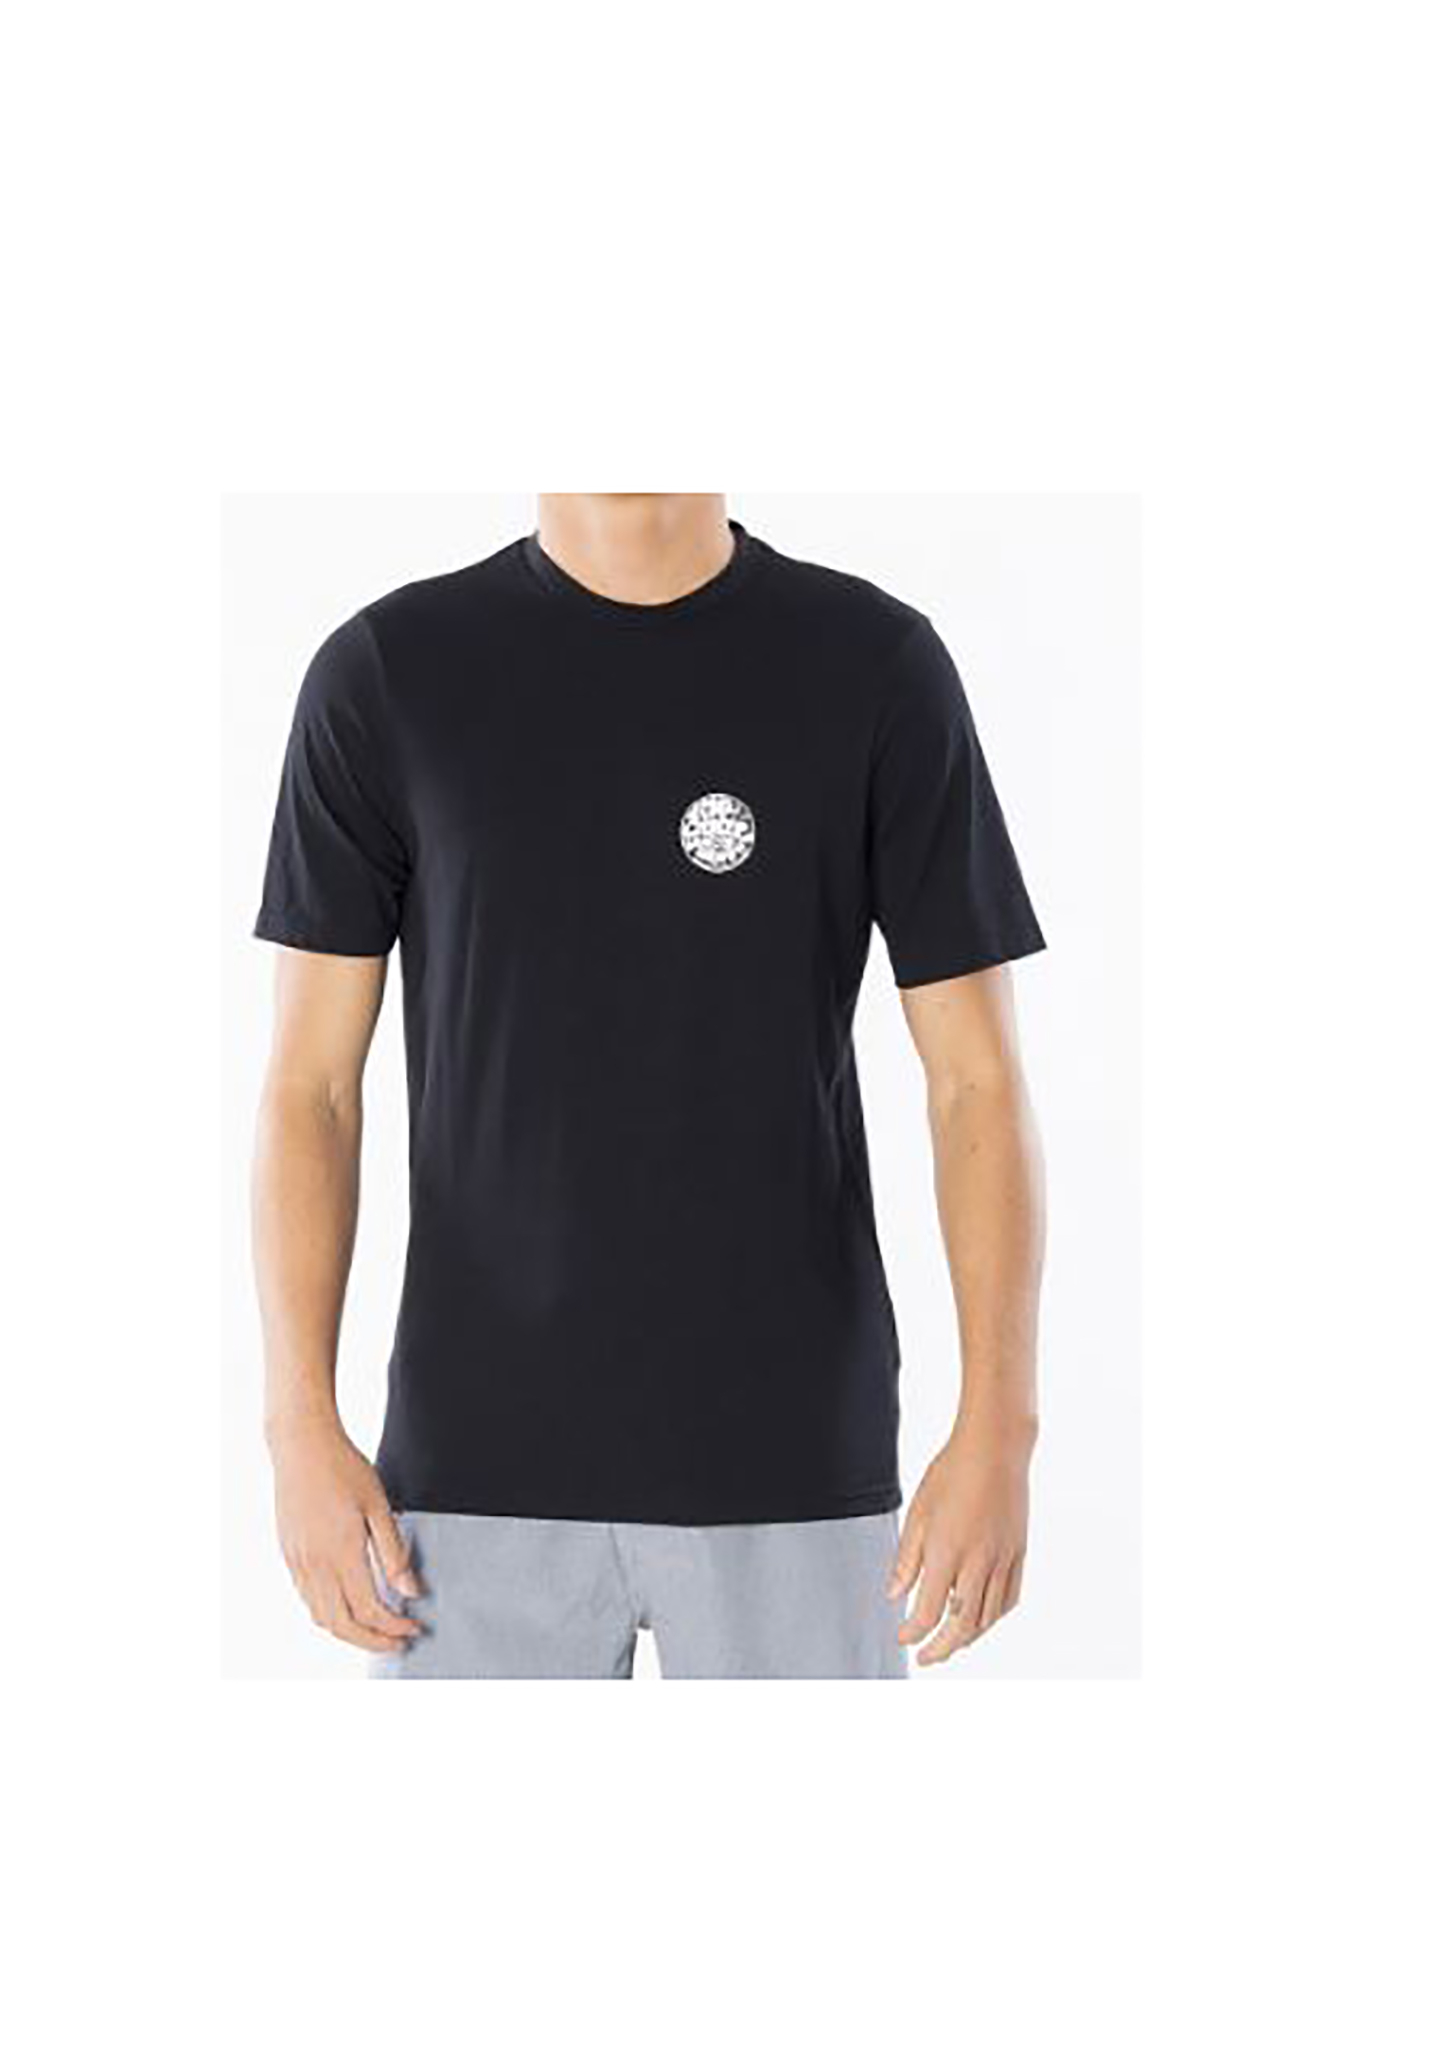 Rip Curl Wettie Logo S/S T-Shirt black S